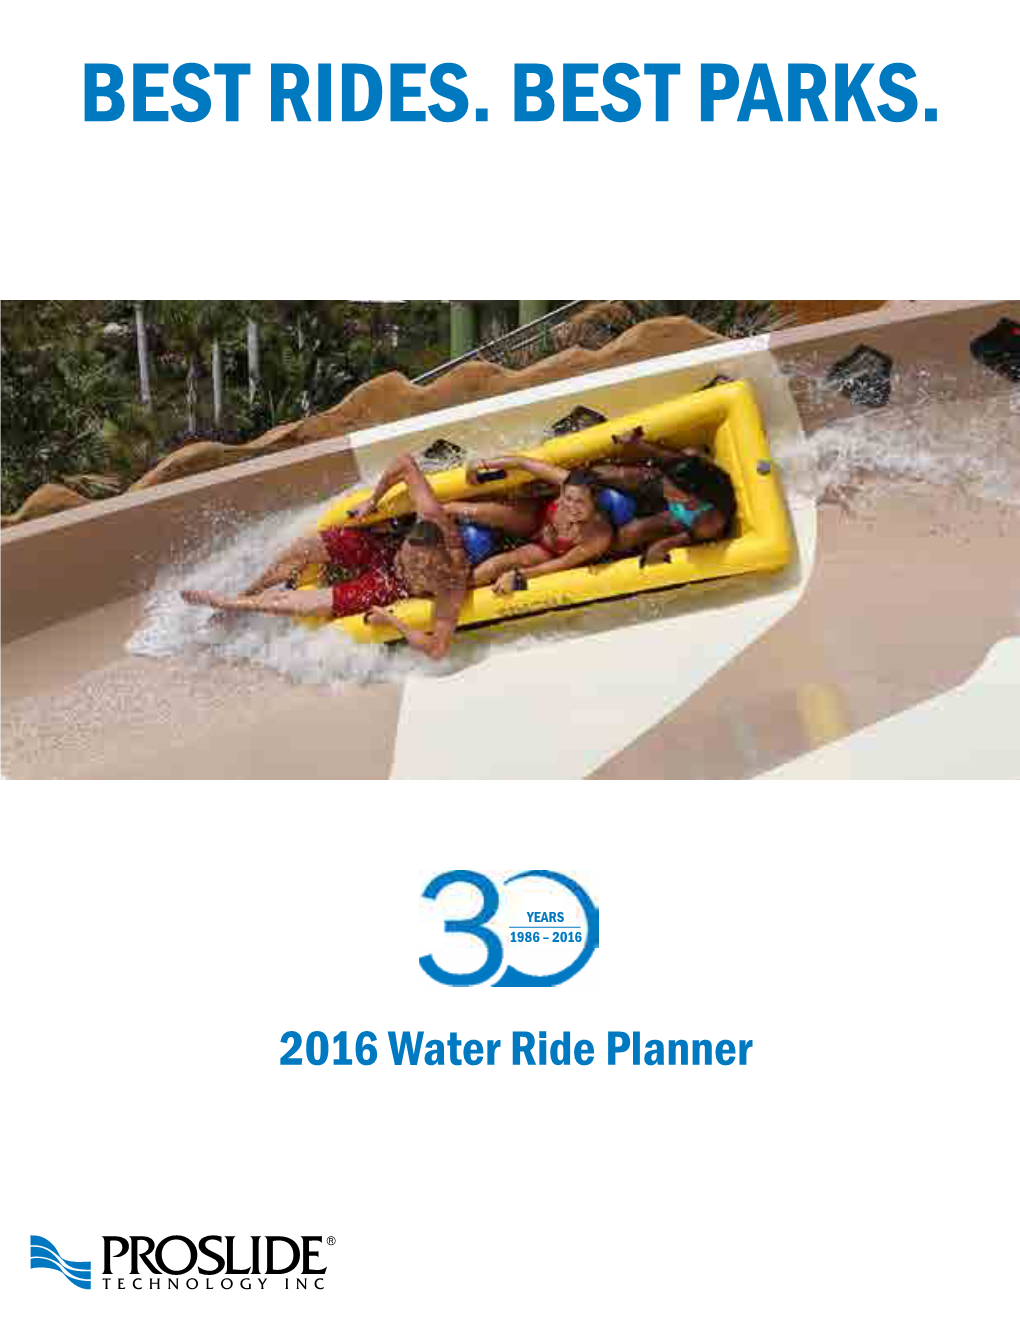 Proslide Water Ride Planner